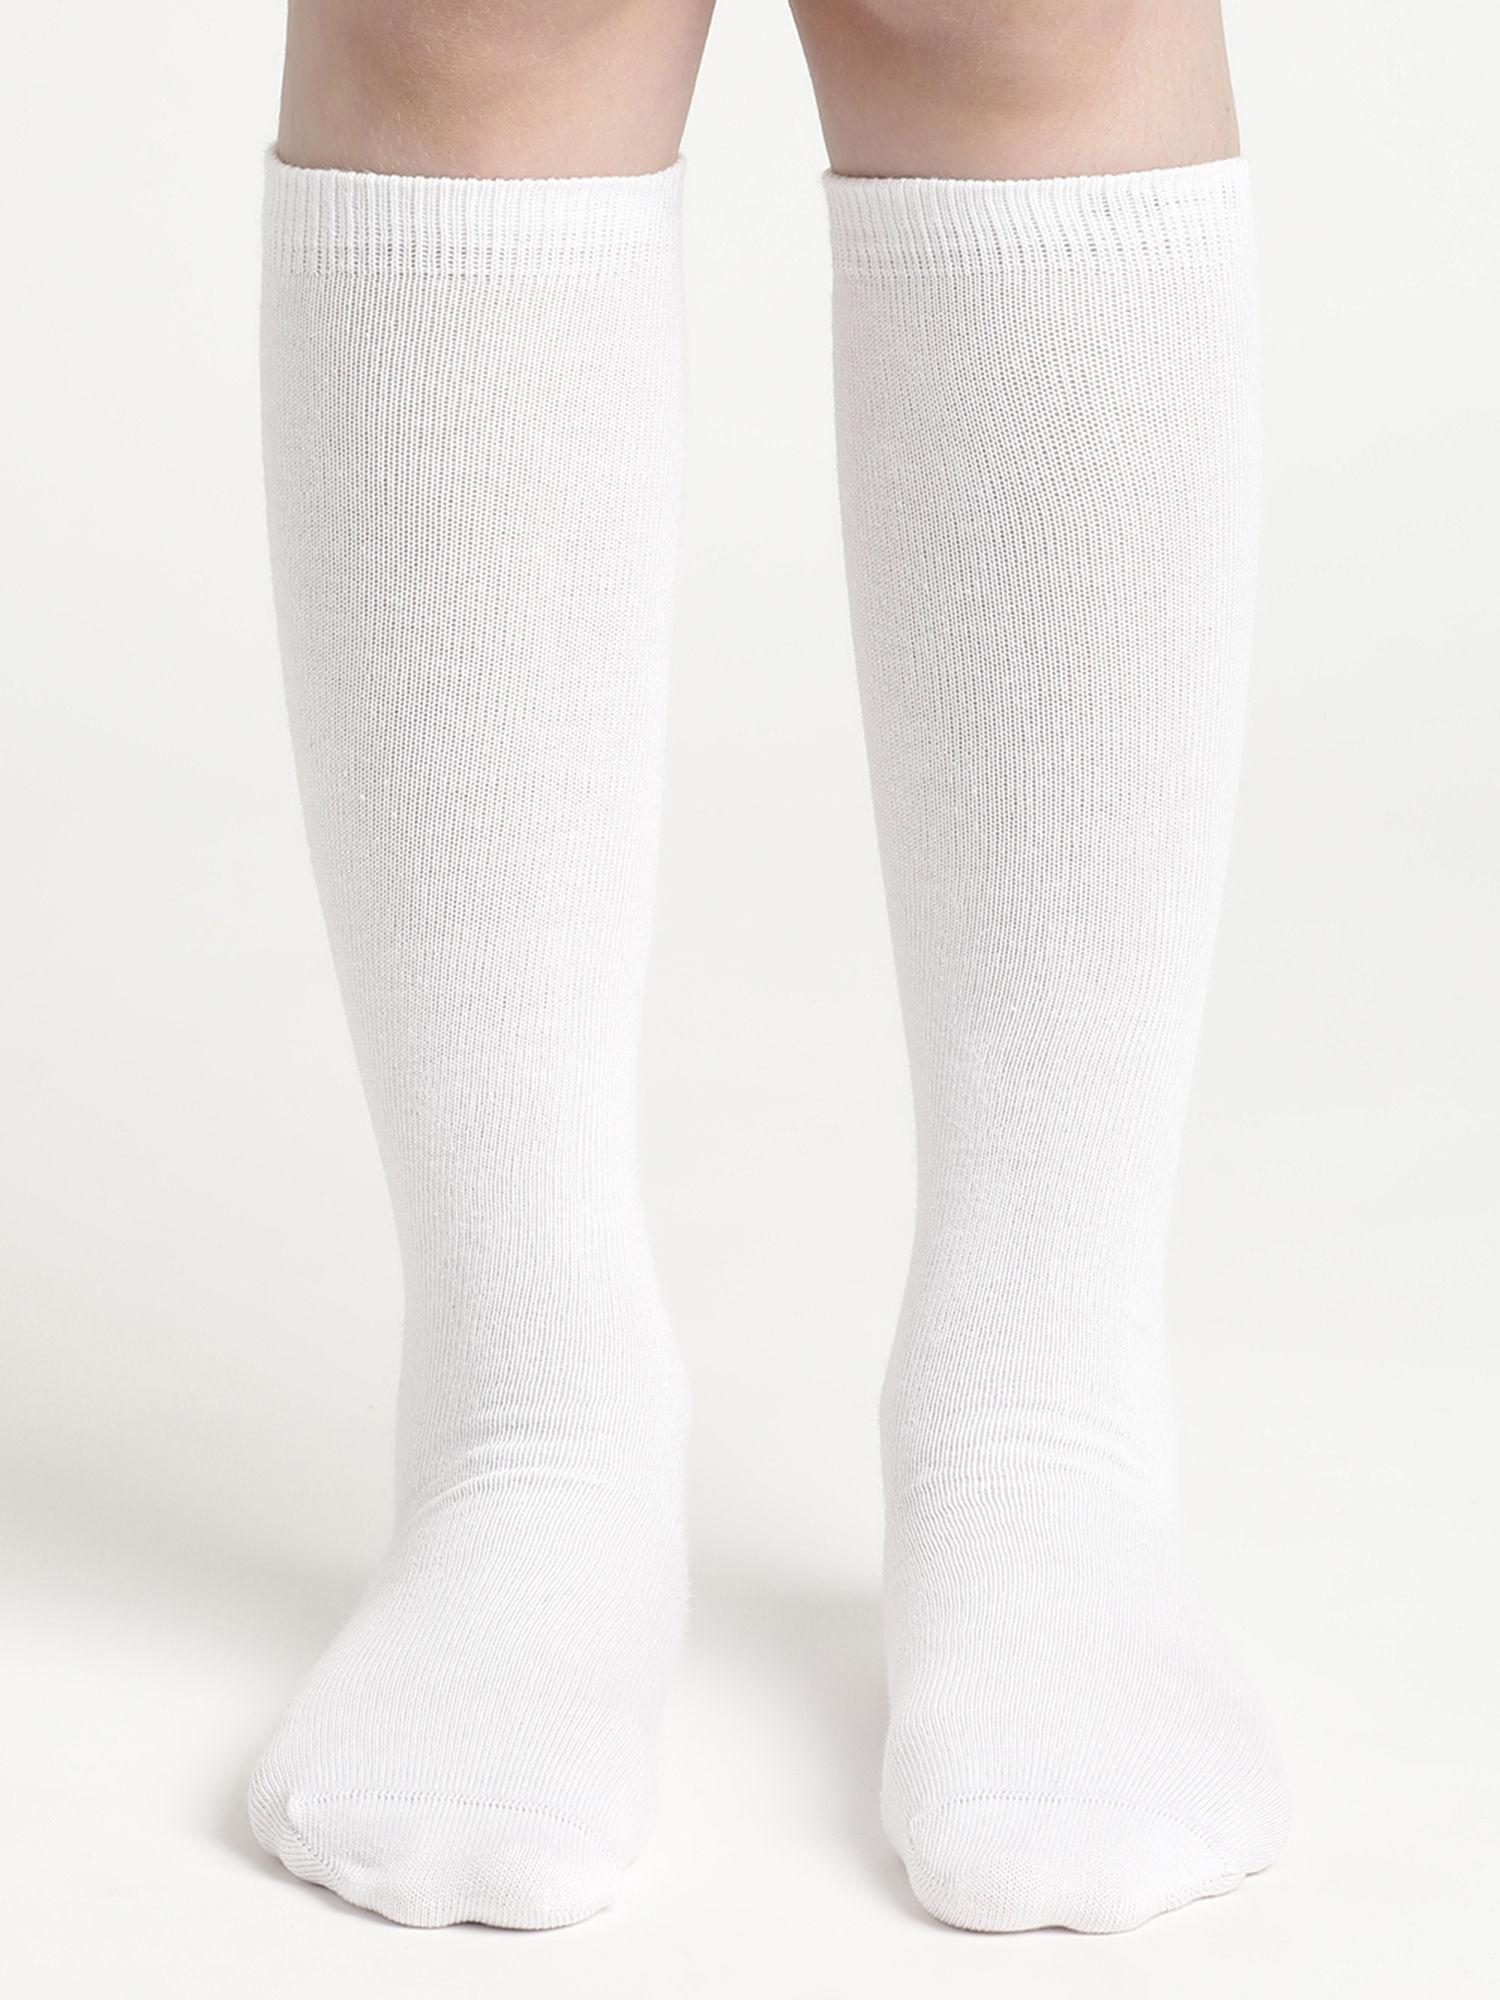 7902 Unisex Cotton Nylon Stretch Knee Length Socks - White